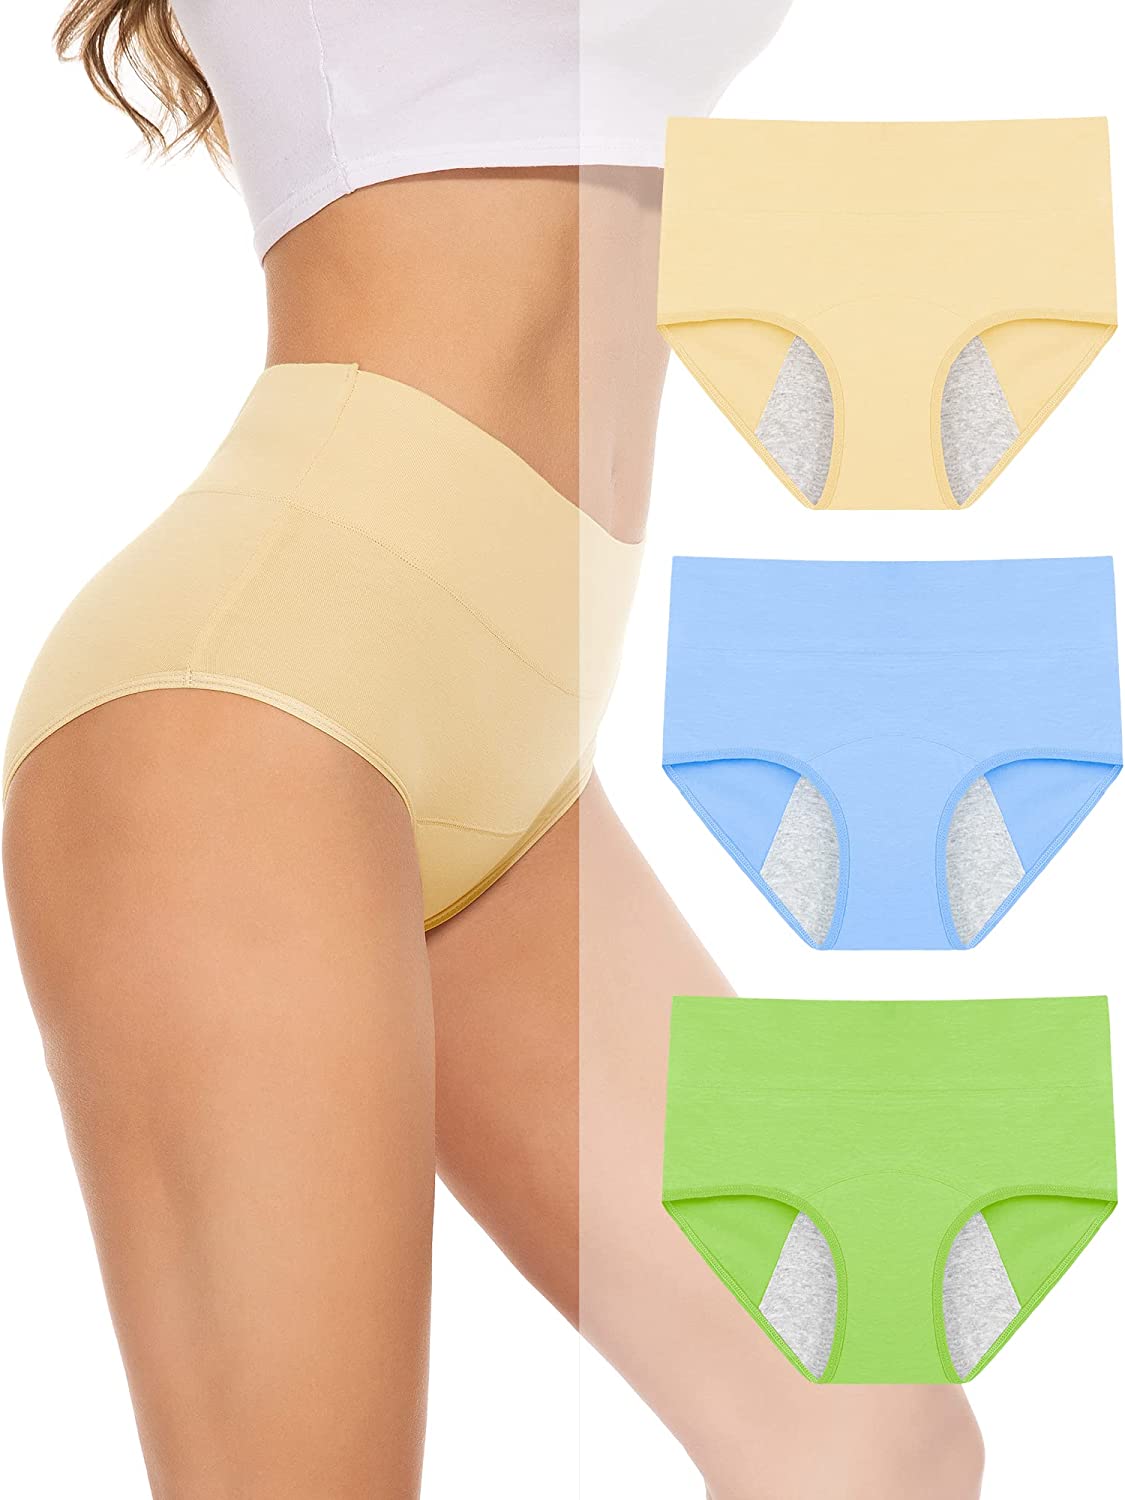 PULIOU Period Underwear for Women Menstrual Panties Teens High